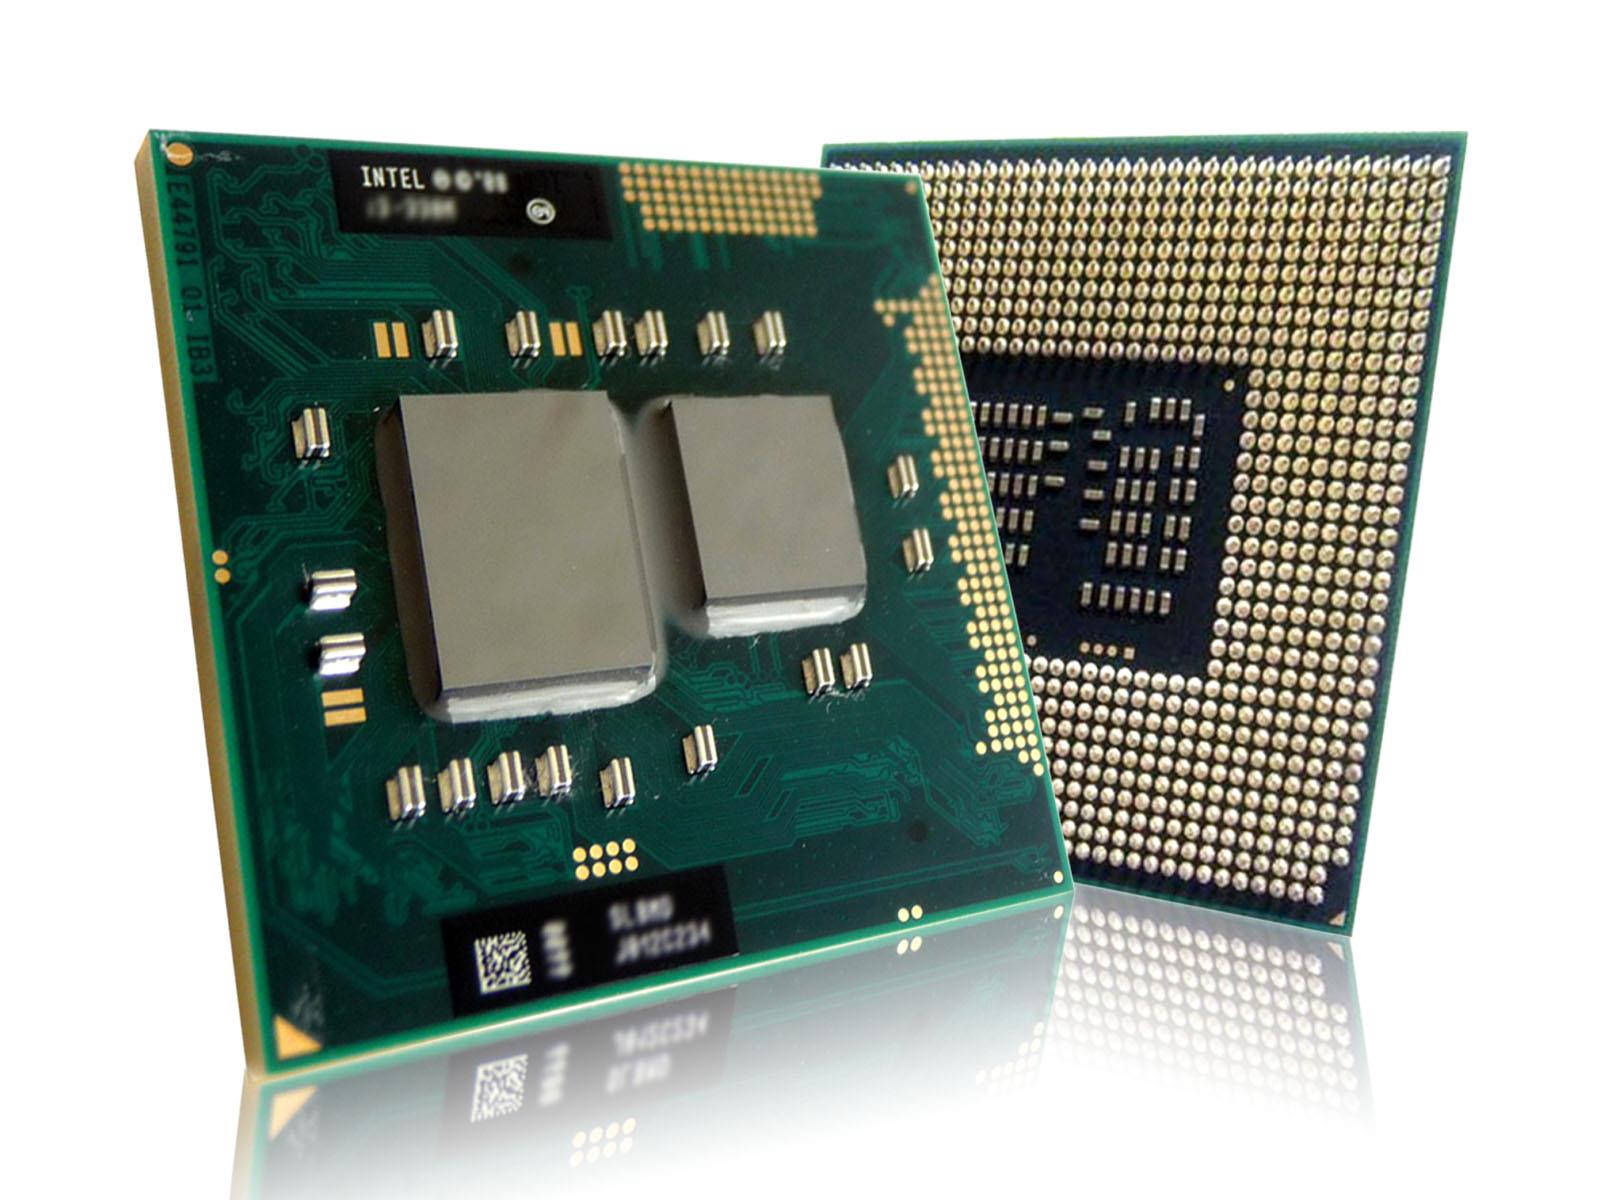 Intel i5-450M Mobile CPU